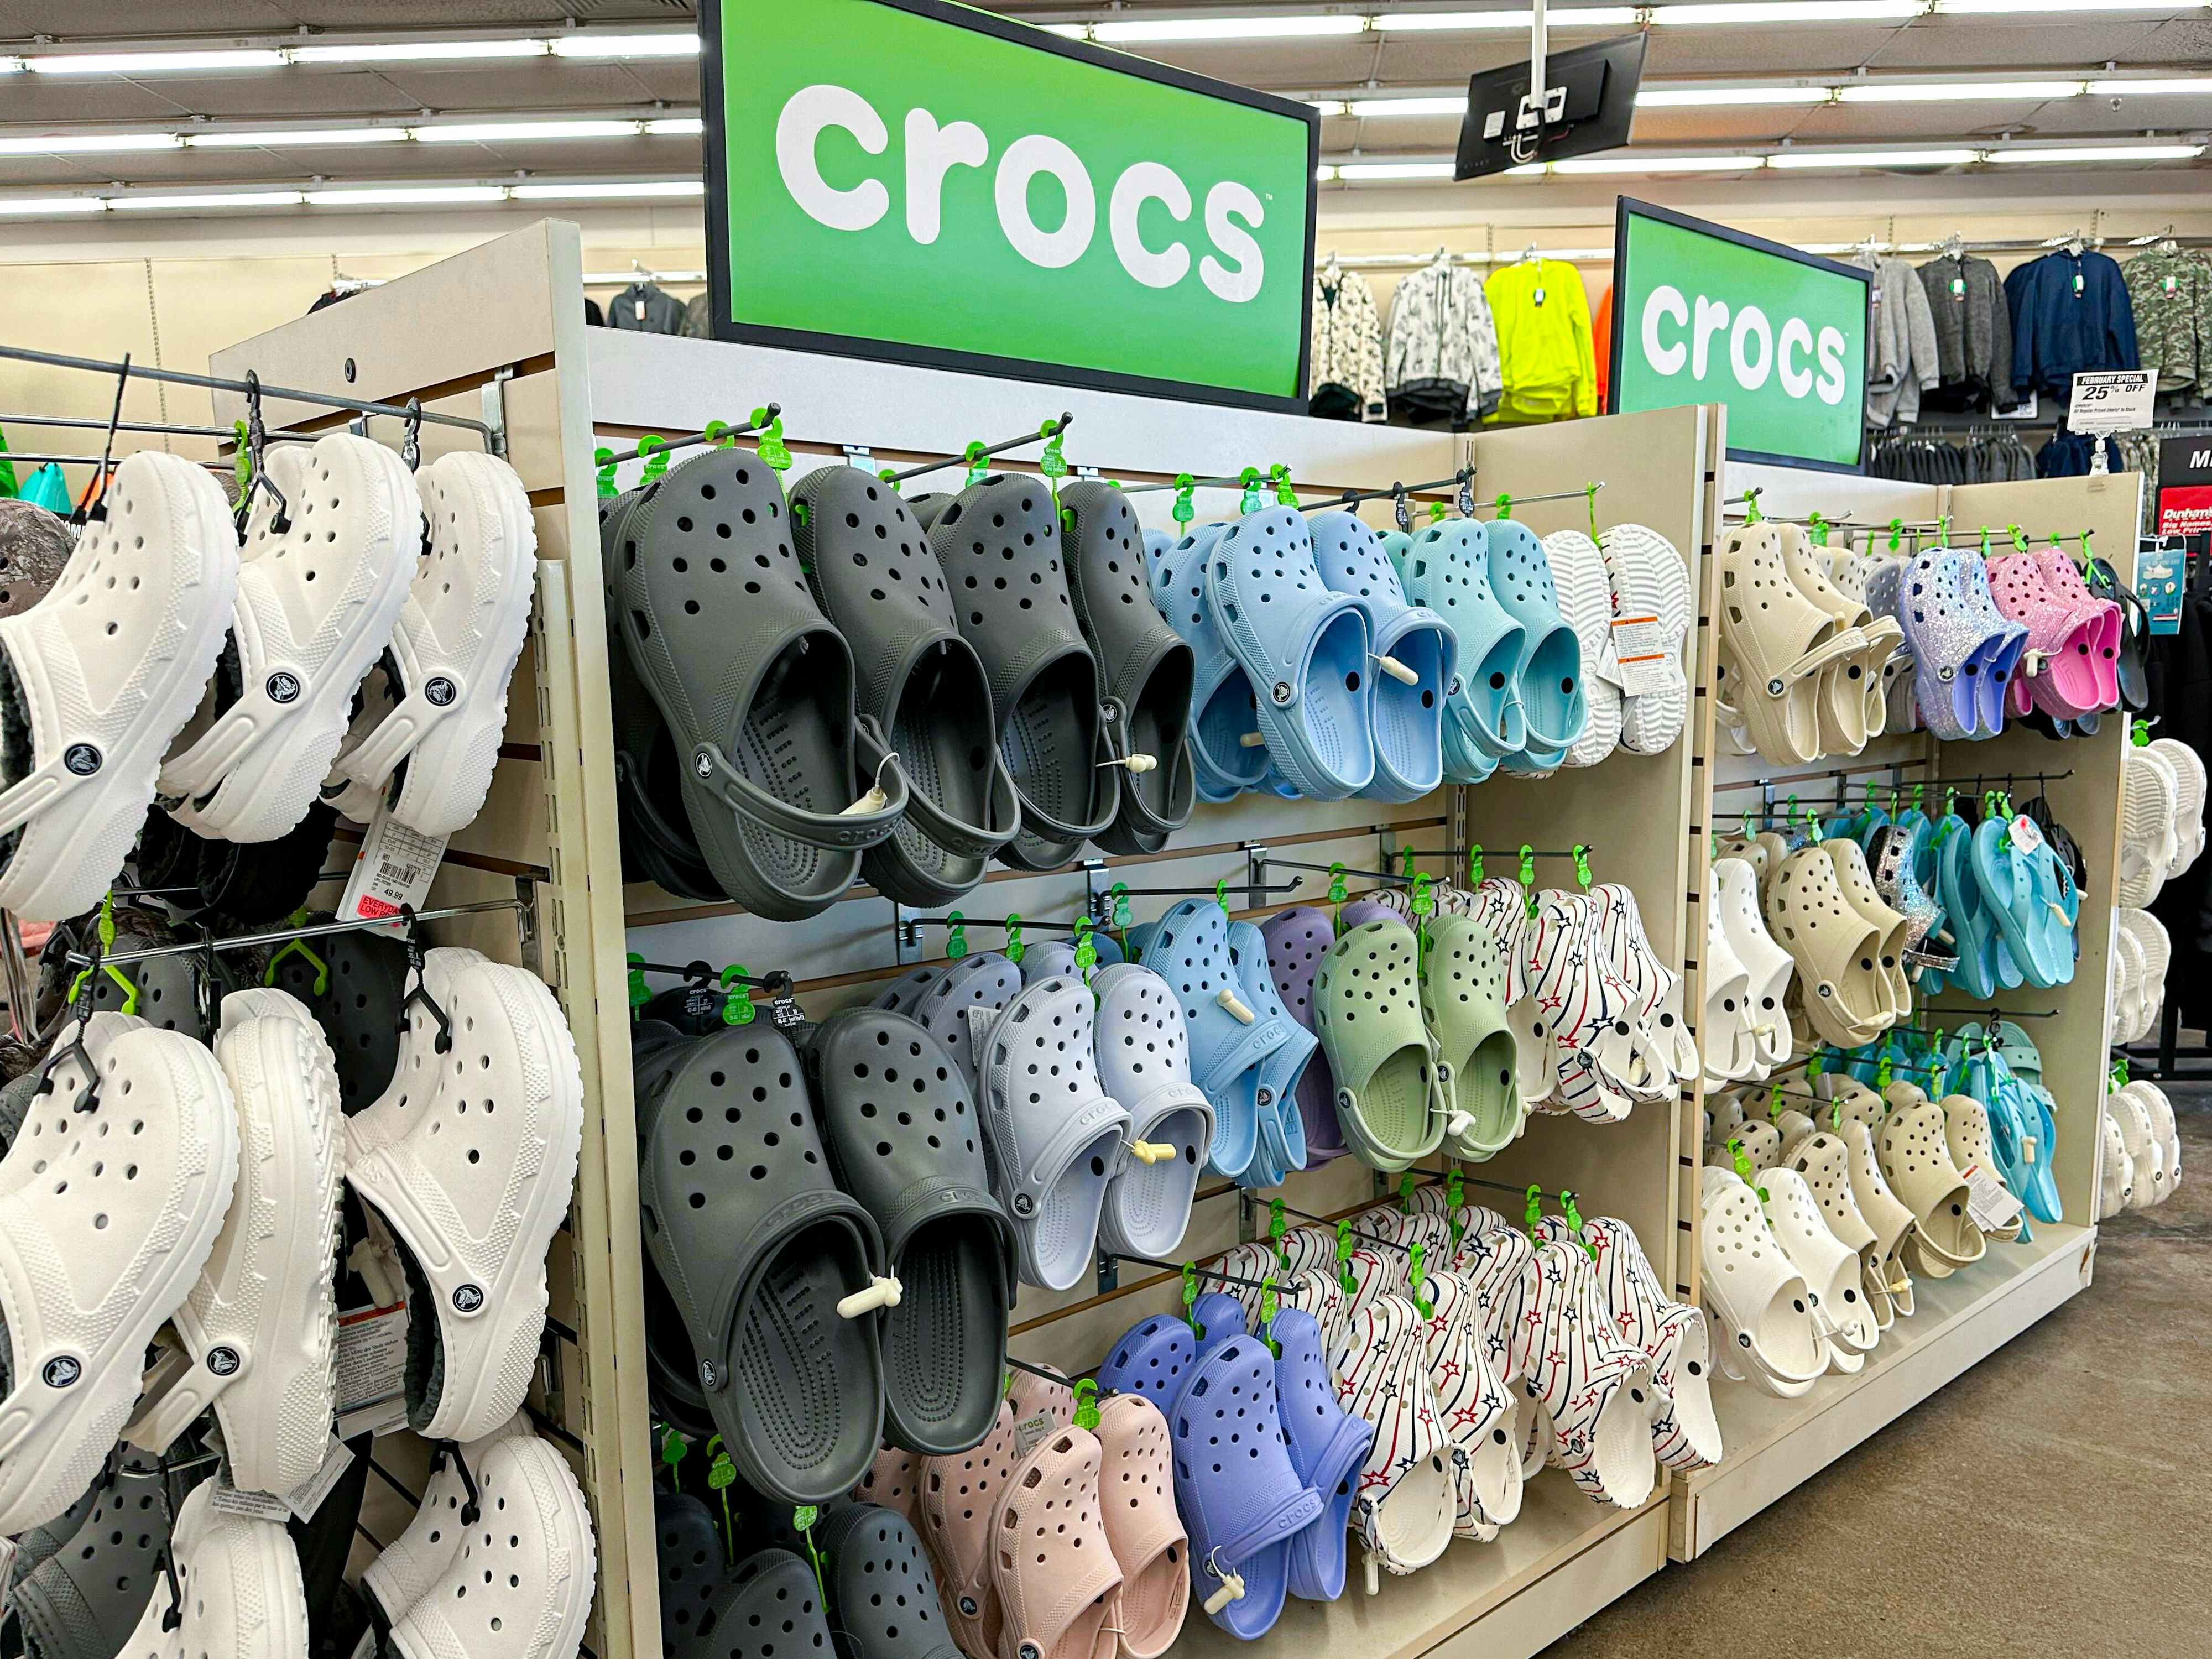 Get Crocs Flip-Flops for Just $22